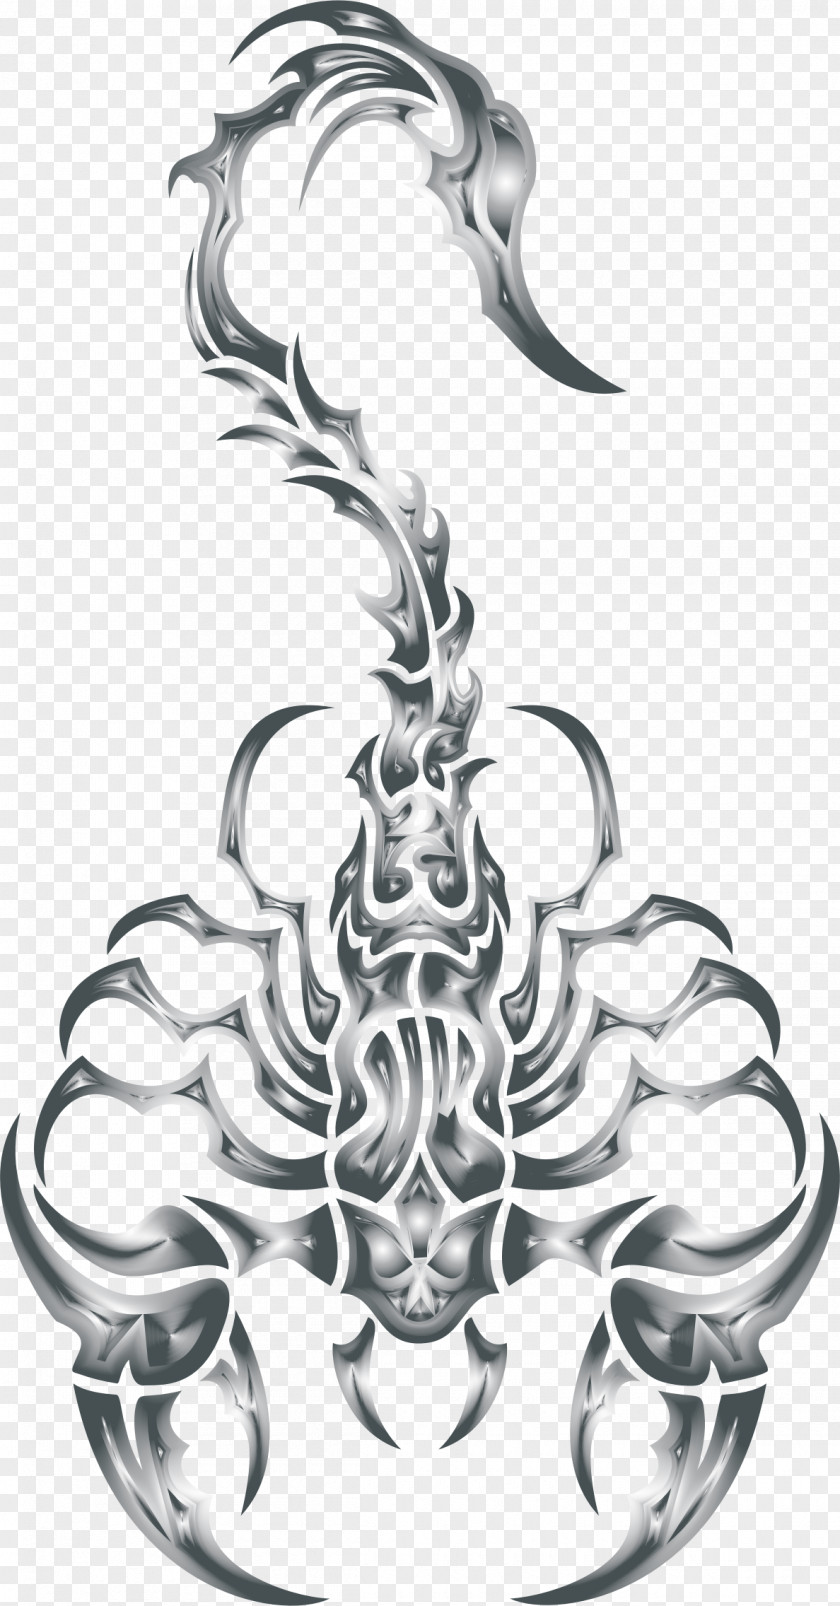 Scorpions Scorpion Tattoo Animal Venom Clip Art PNG